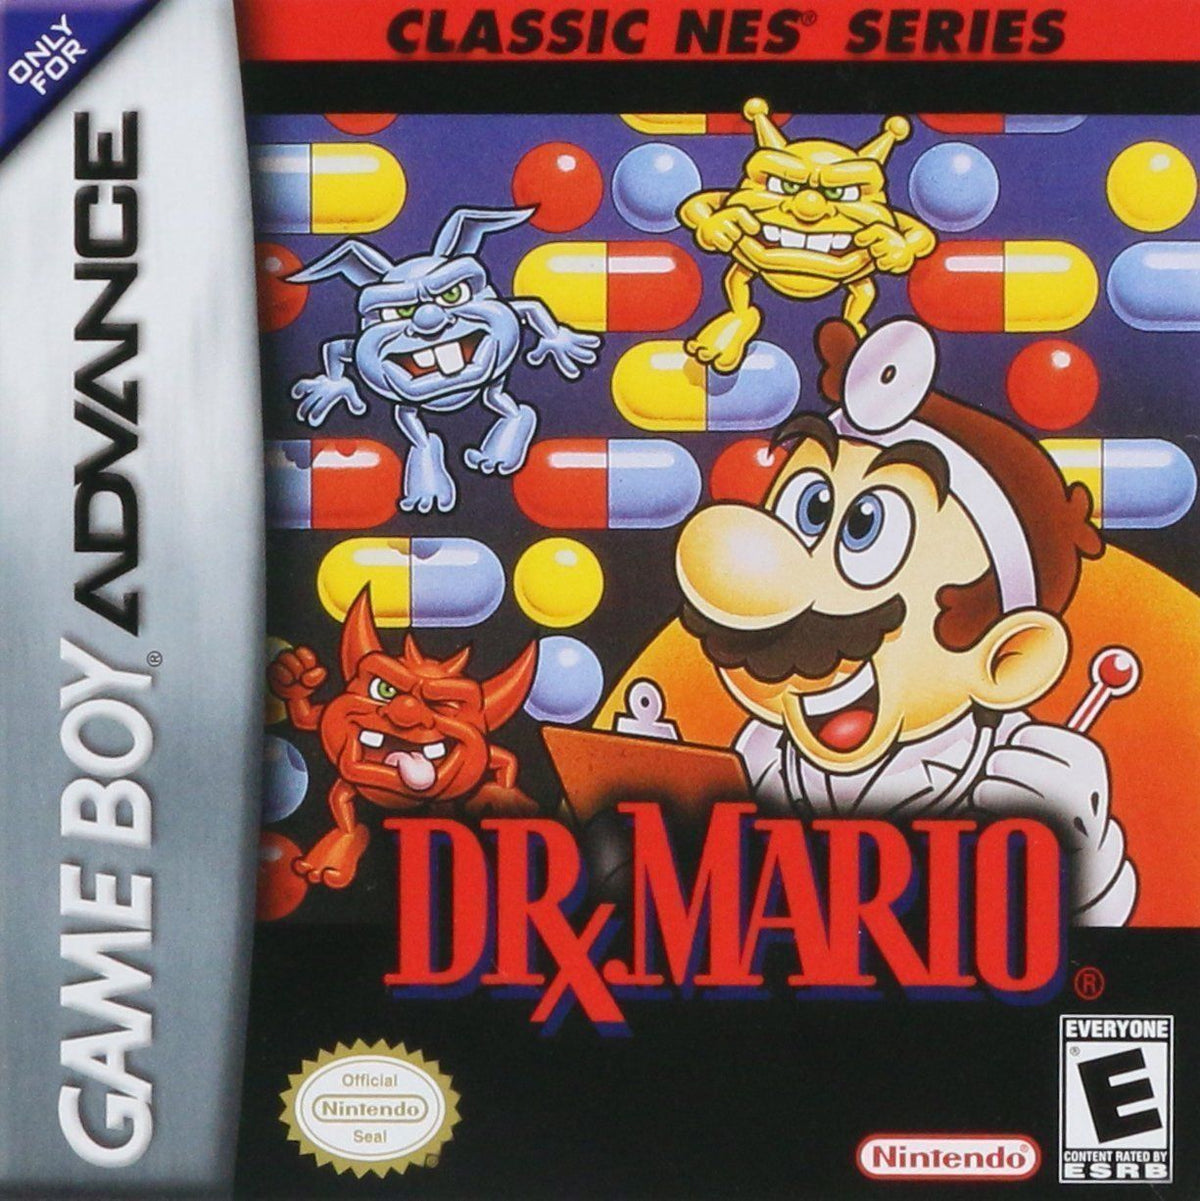 Dr. Mario classic NES series (import, nieuw in seal!) Gamesellers.nl